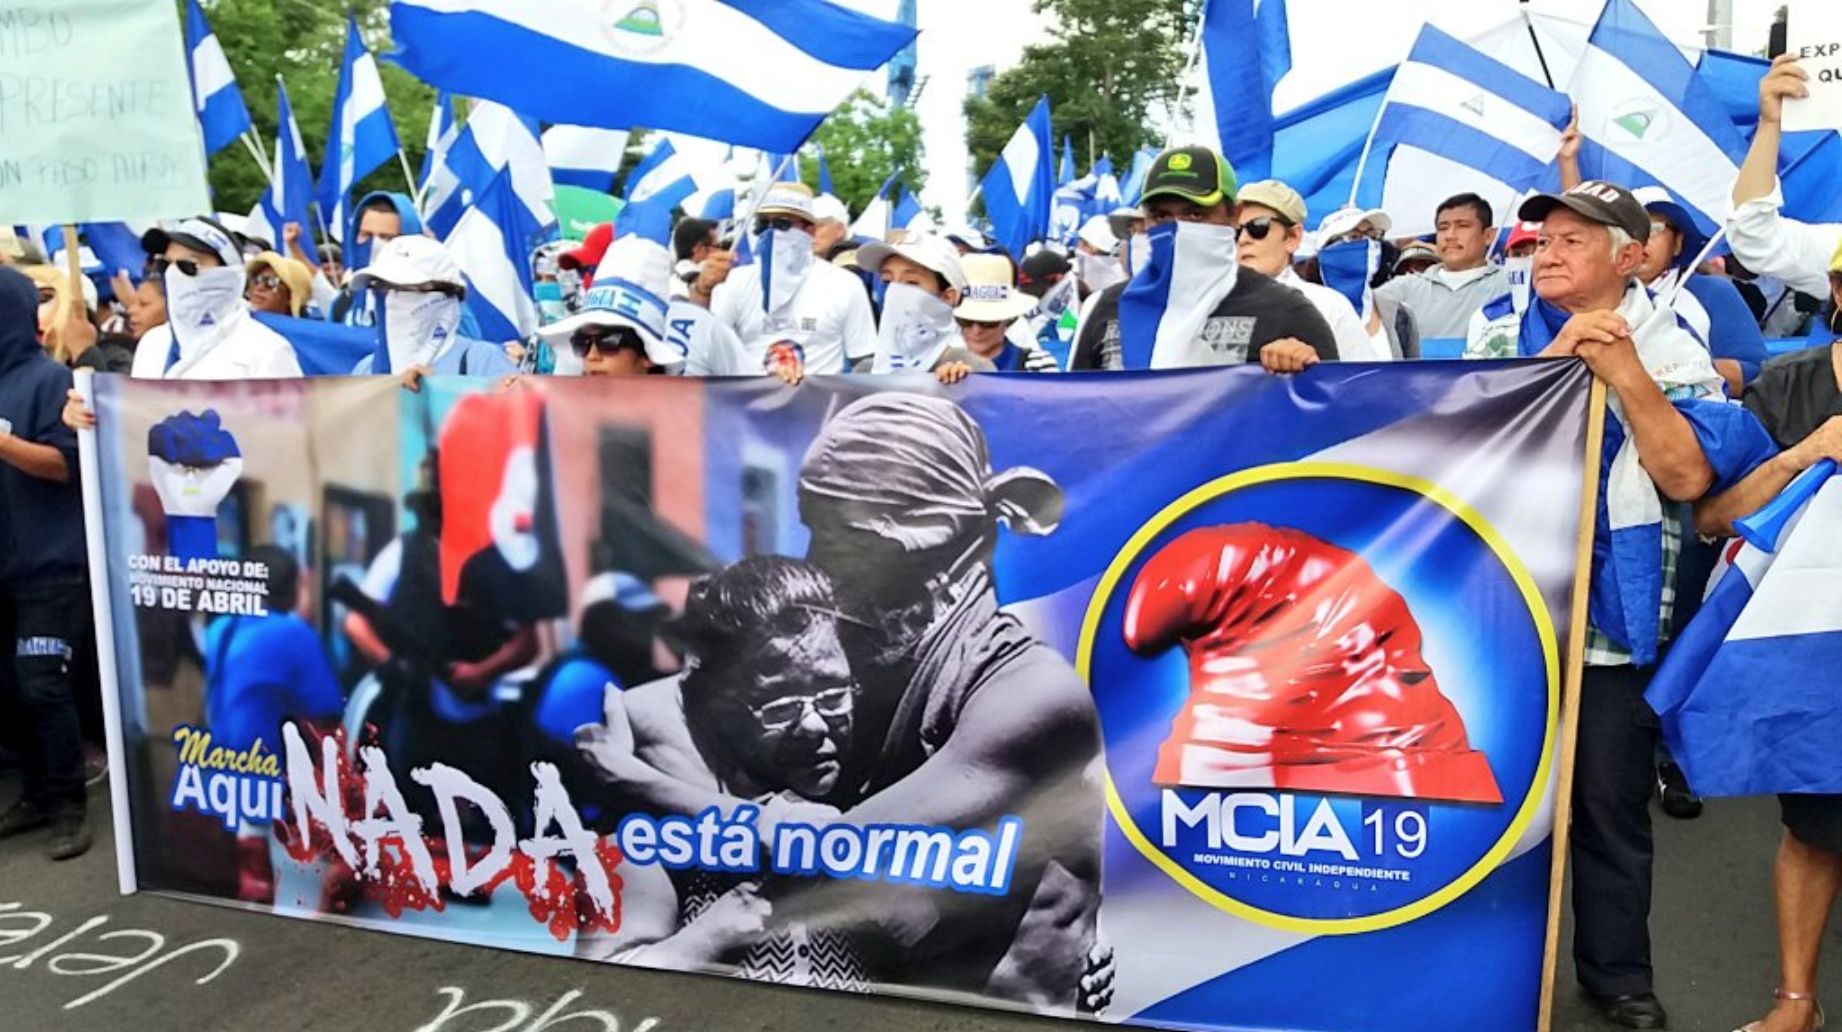 Marchan para desmentir la falsa «normalidad» que pregona la dictadura. Foto: W. Benavides